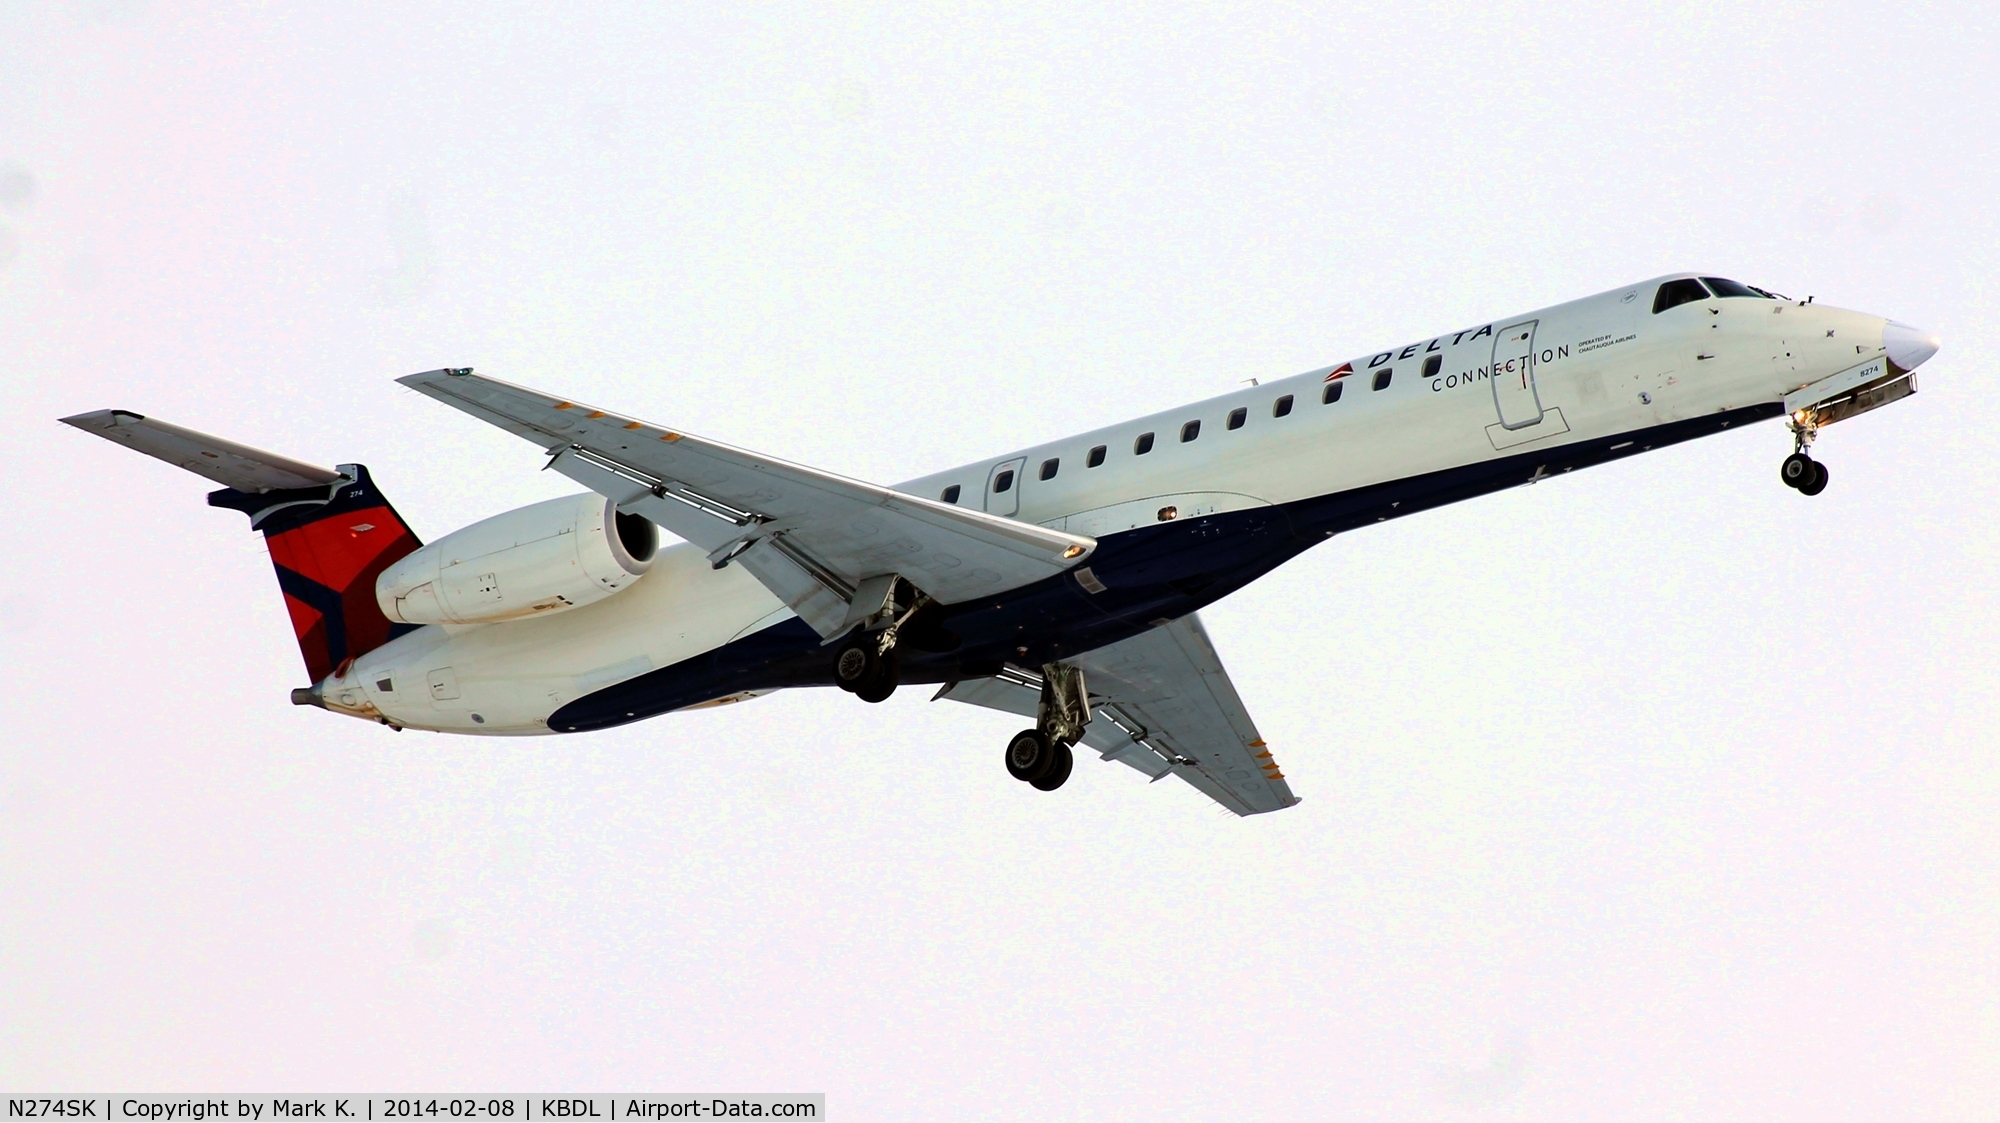 N274SK, 2000 Embraer EMB-145LR C/N 145344, Chautauqua 6363, an Embraer EMB-145LR on final for runway 24 from Detroit, Michigan (KDTW).